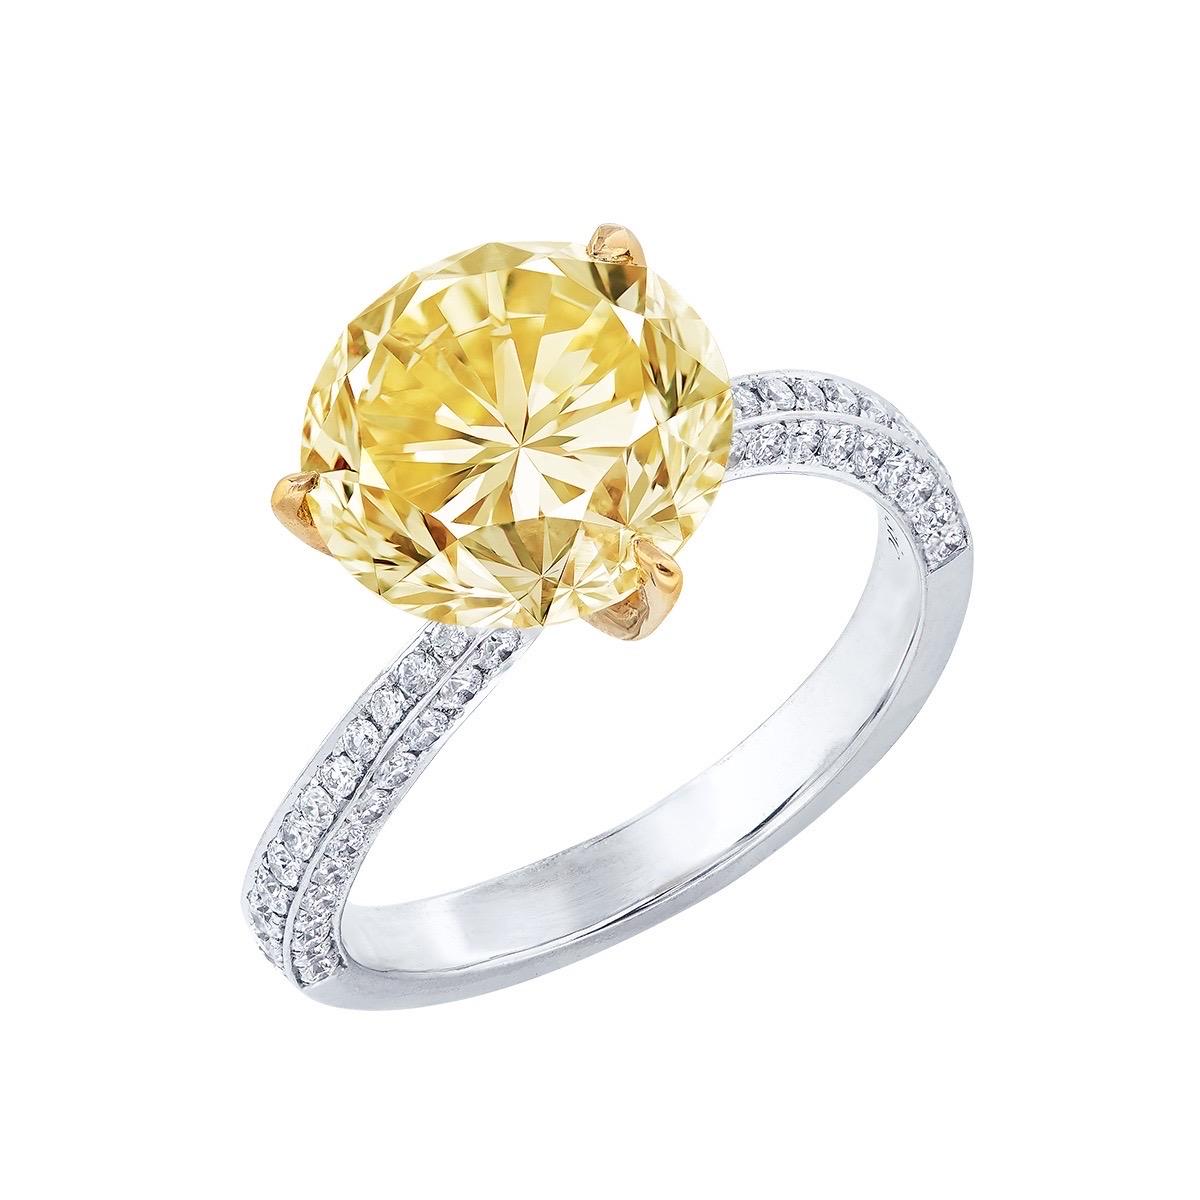 Round Cut Emilio Jewelry Gia Certified 4.00 Carat Fancy Intense Yellow Diamond Ring For Sale